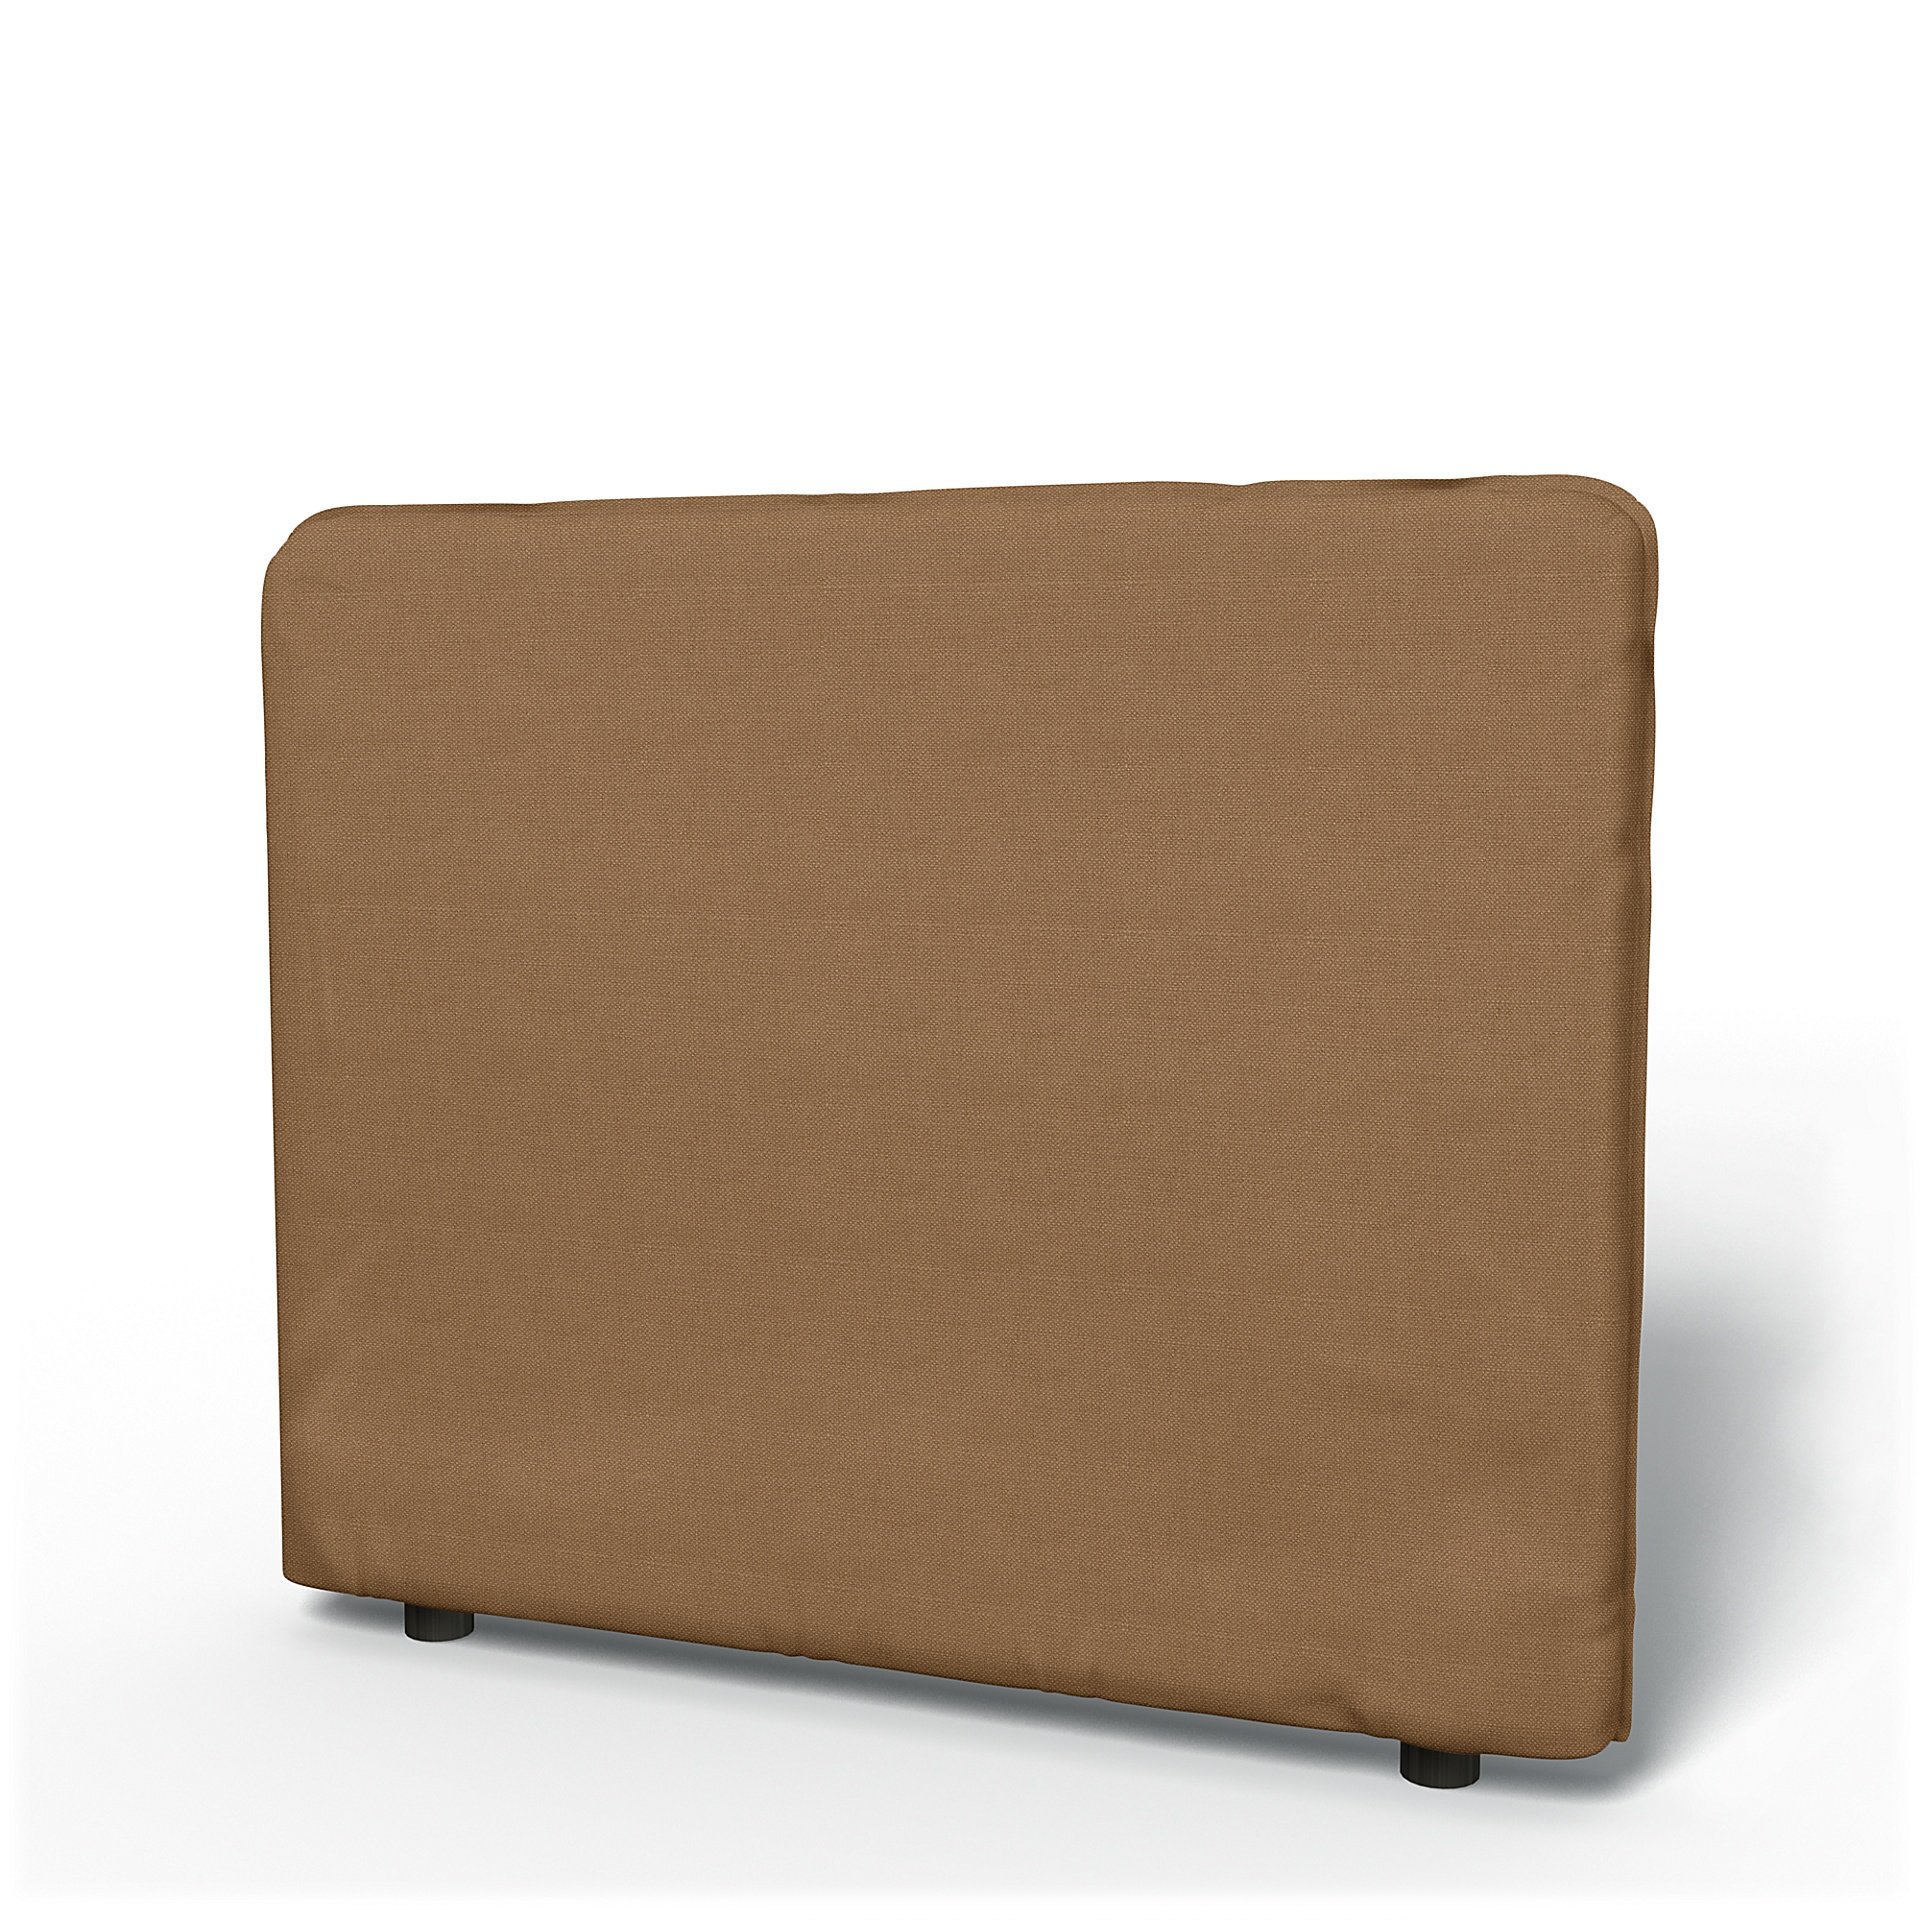 IKEA - Vallentuna Low Backrest Cover 100x80cm 39x32in, Nougat, Linen - Bemz